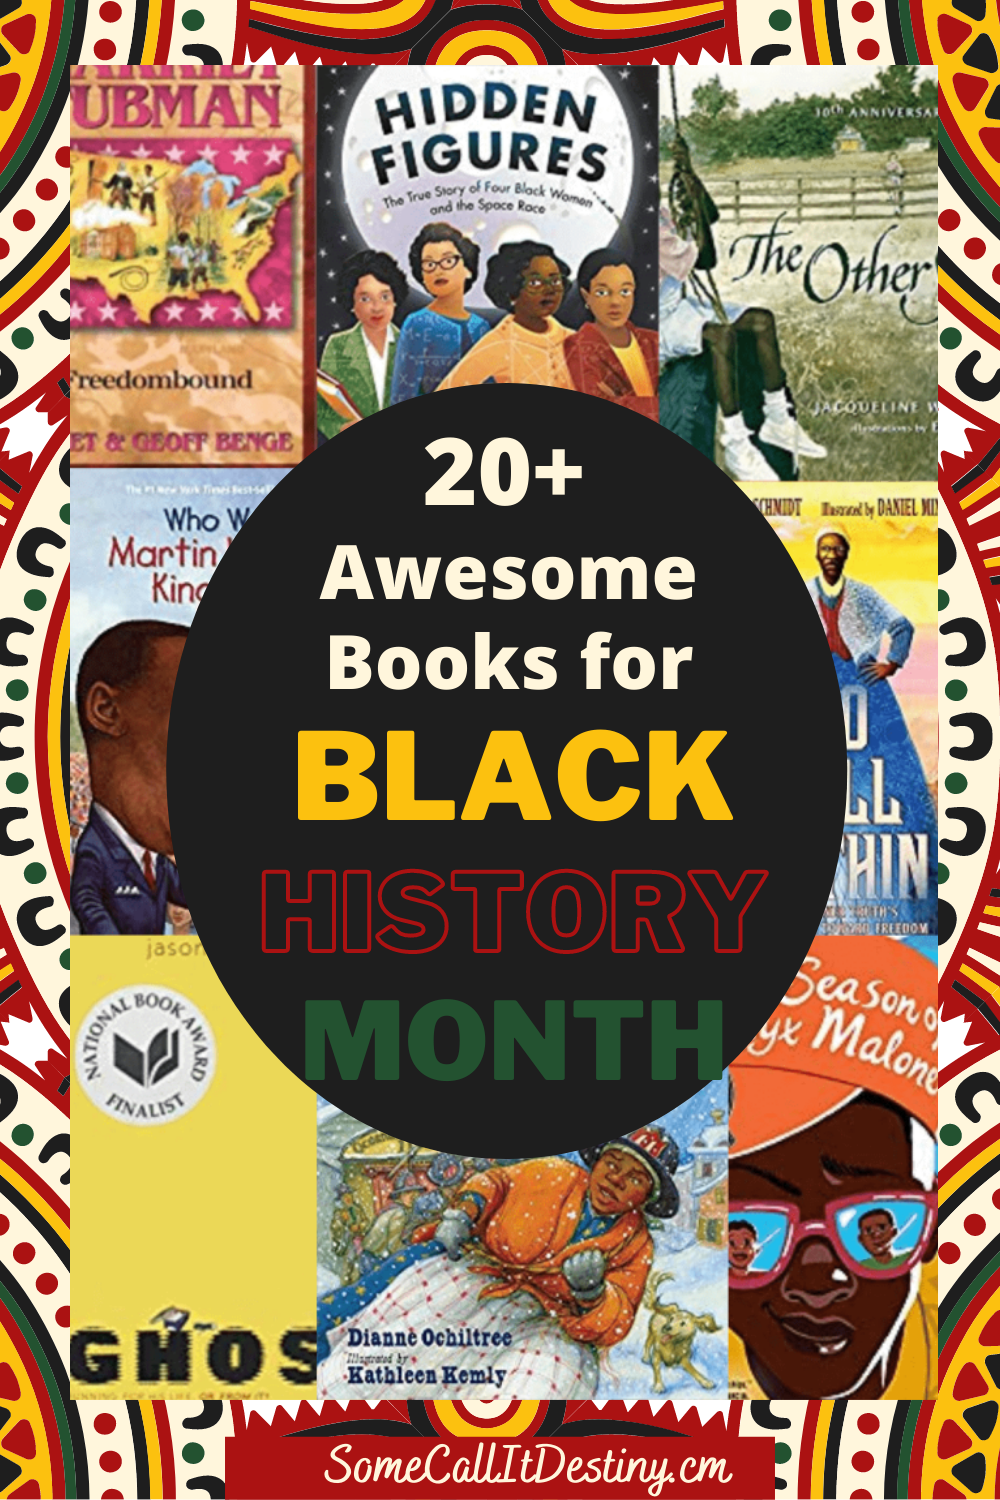 Black history month books